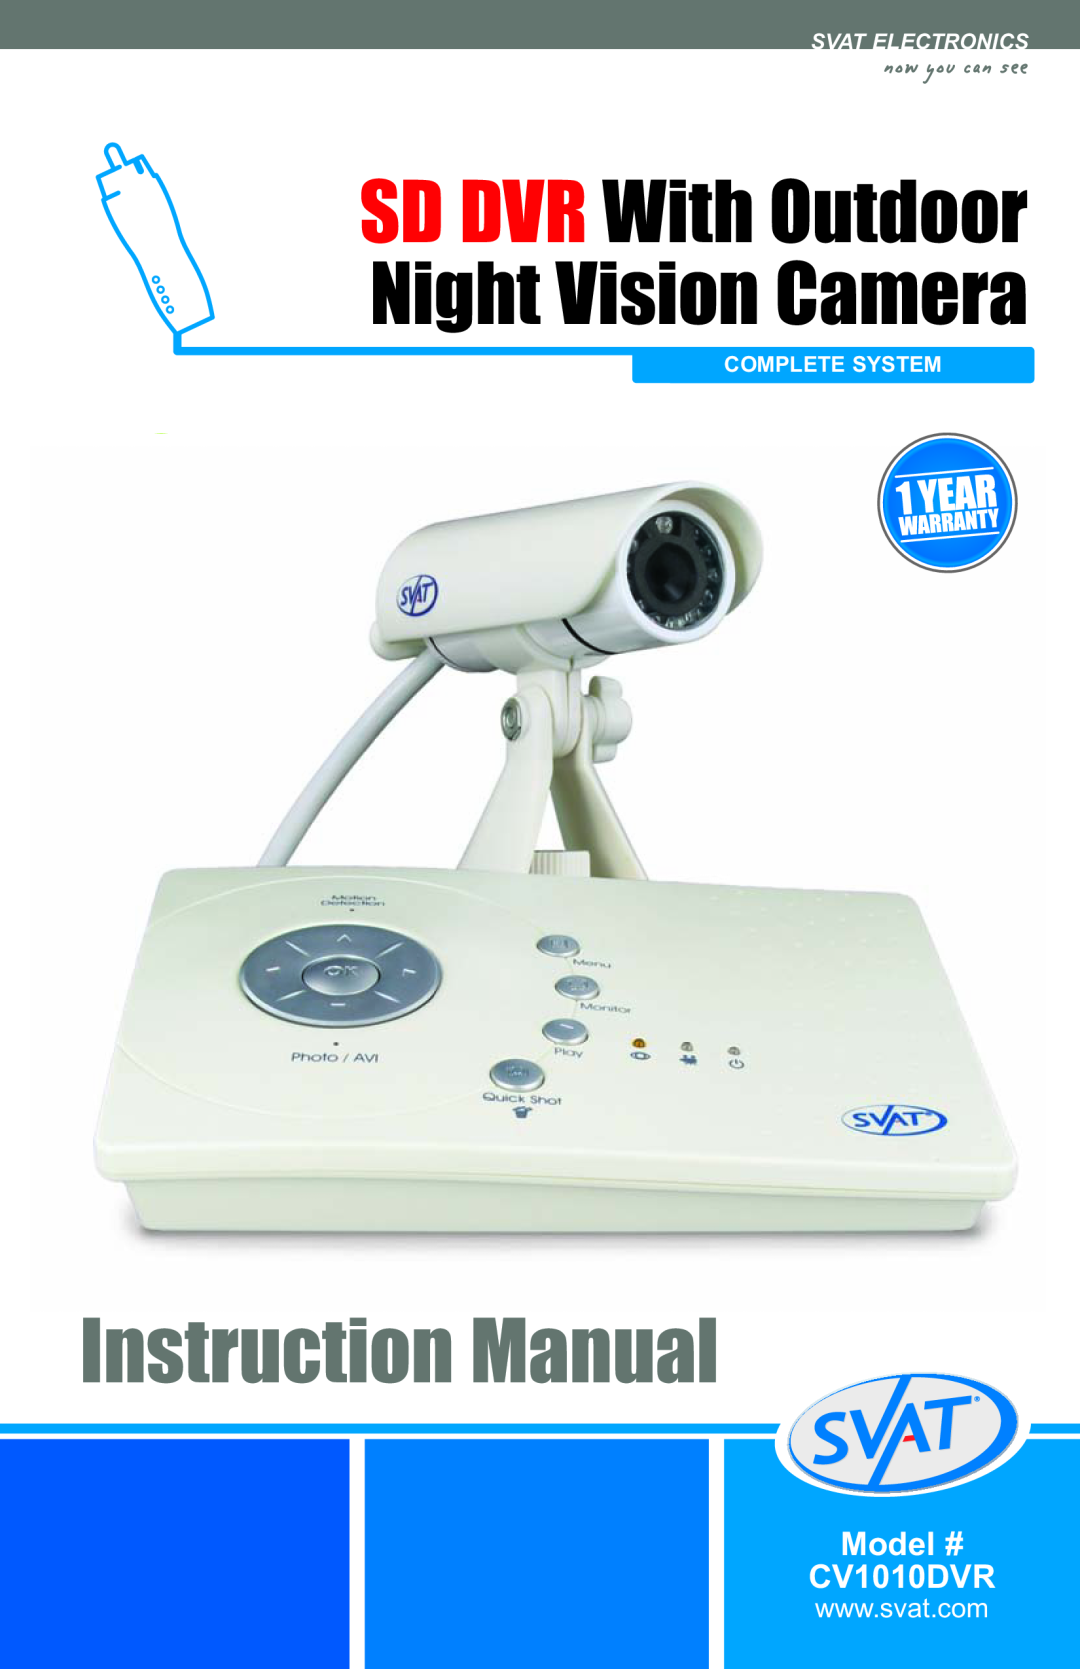 SVAT Electronics instruction manual now you can see, Model # CV1010DVR, Instruction Manual, Svat Electronics 